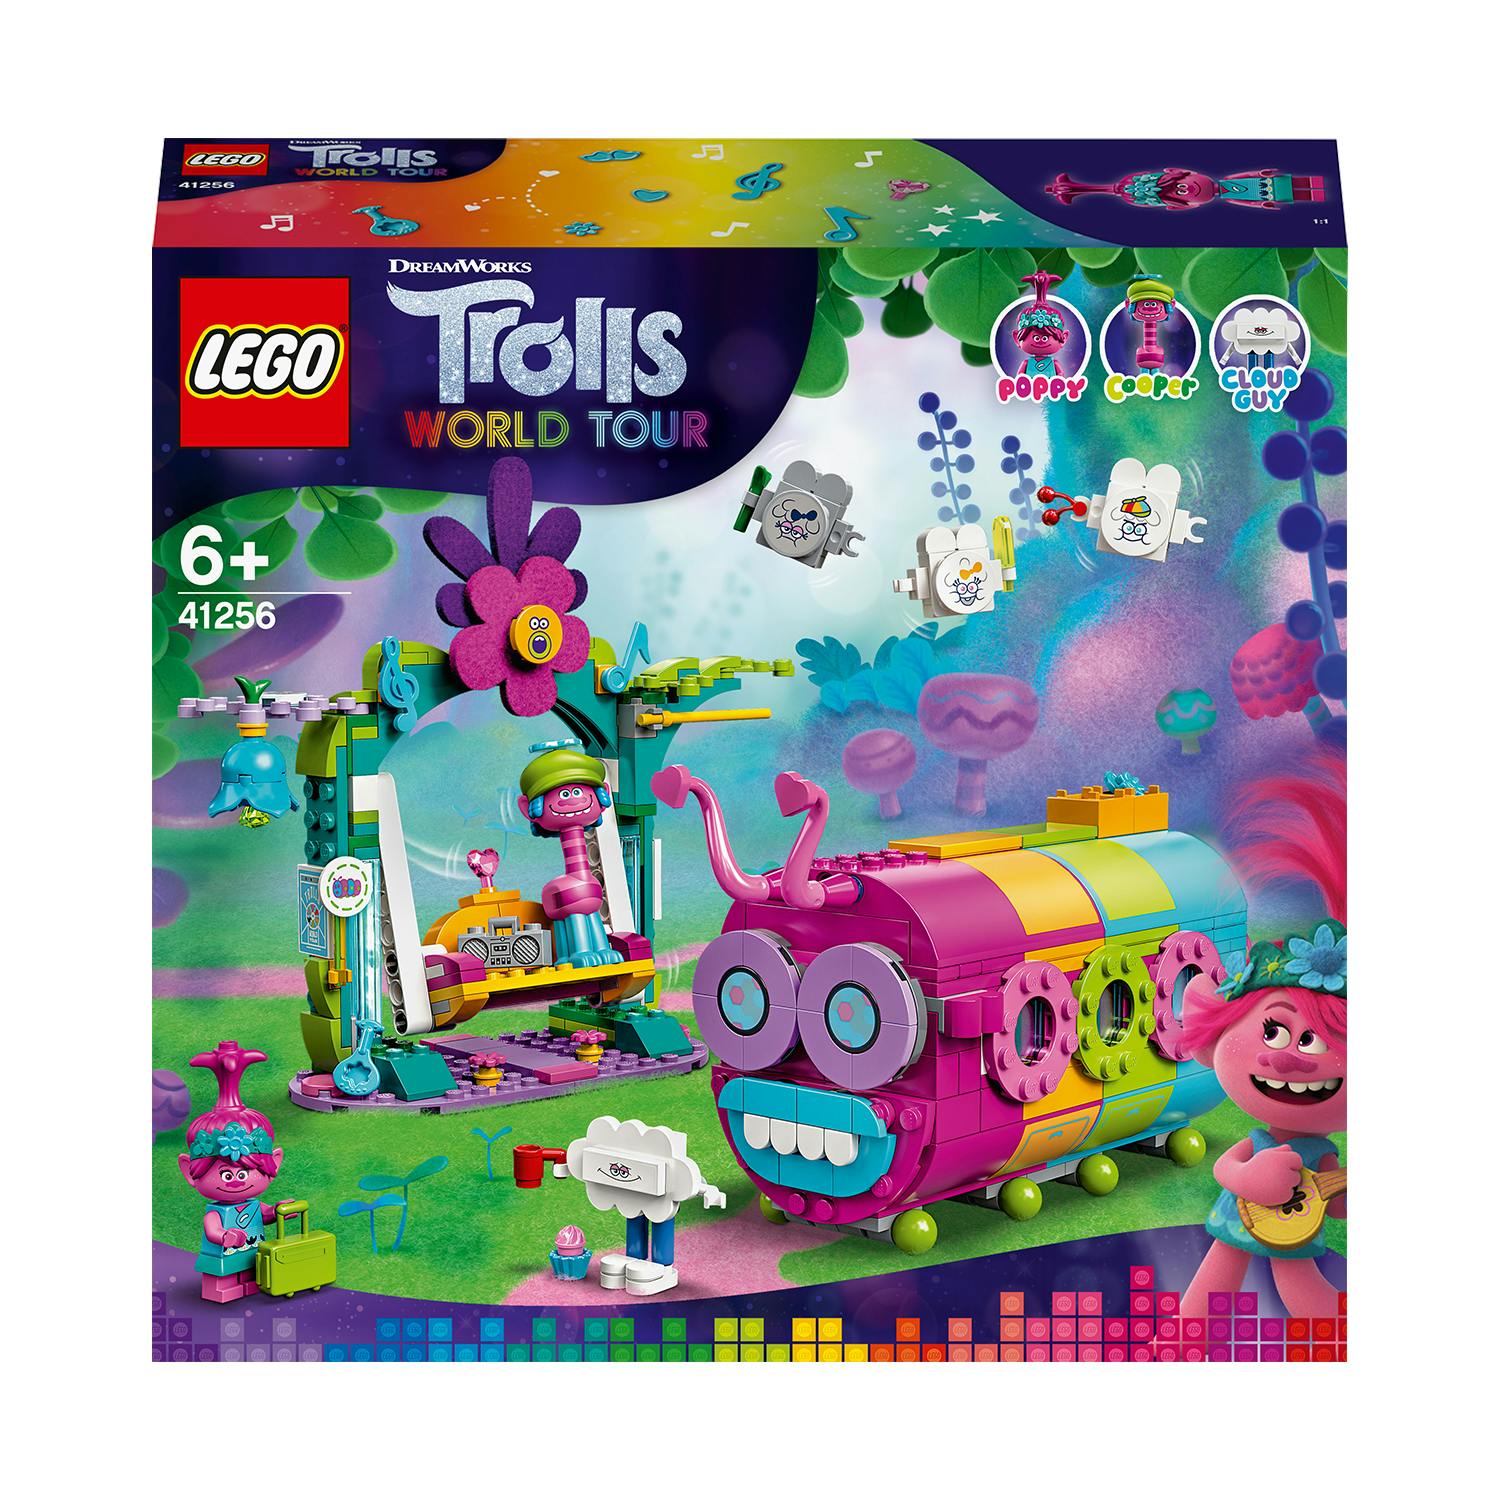 LEGO Trolls Regenboogrupsbus (41256)